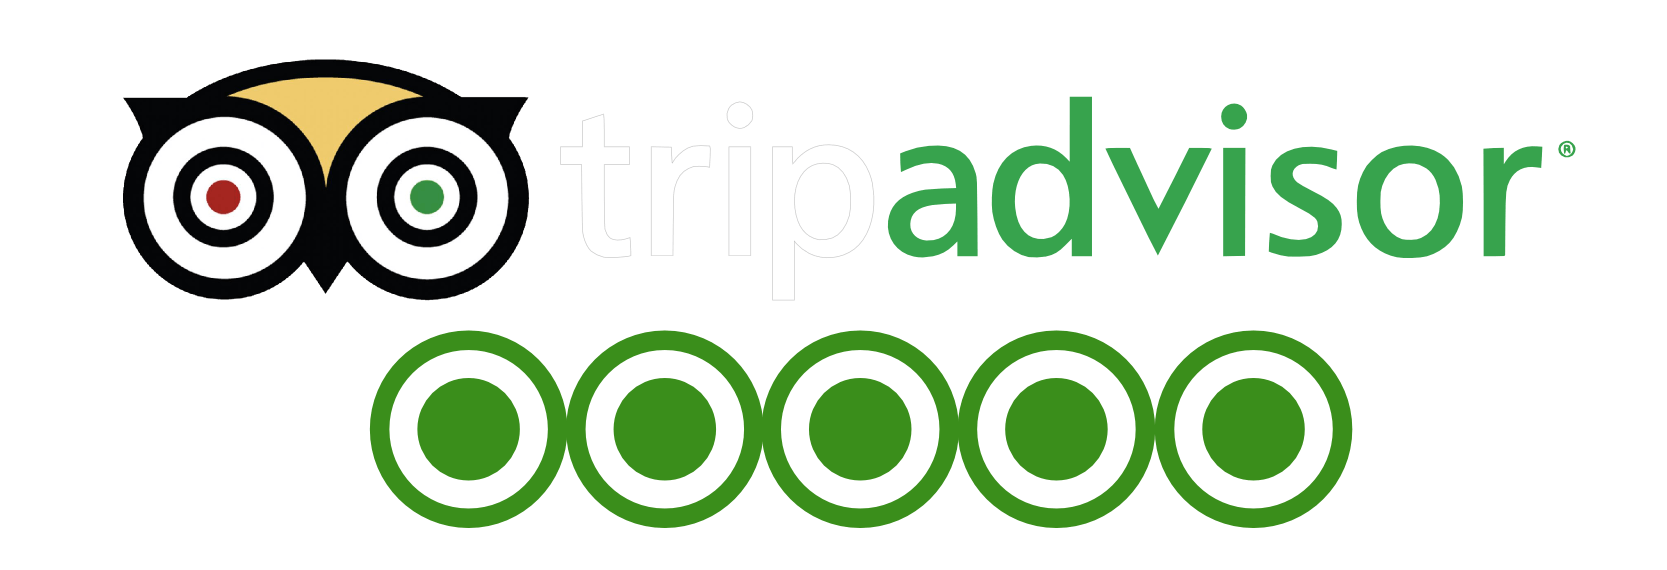 tripadvisor icon vector